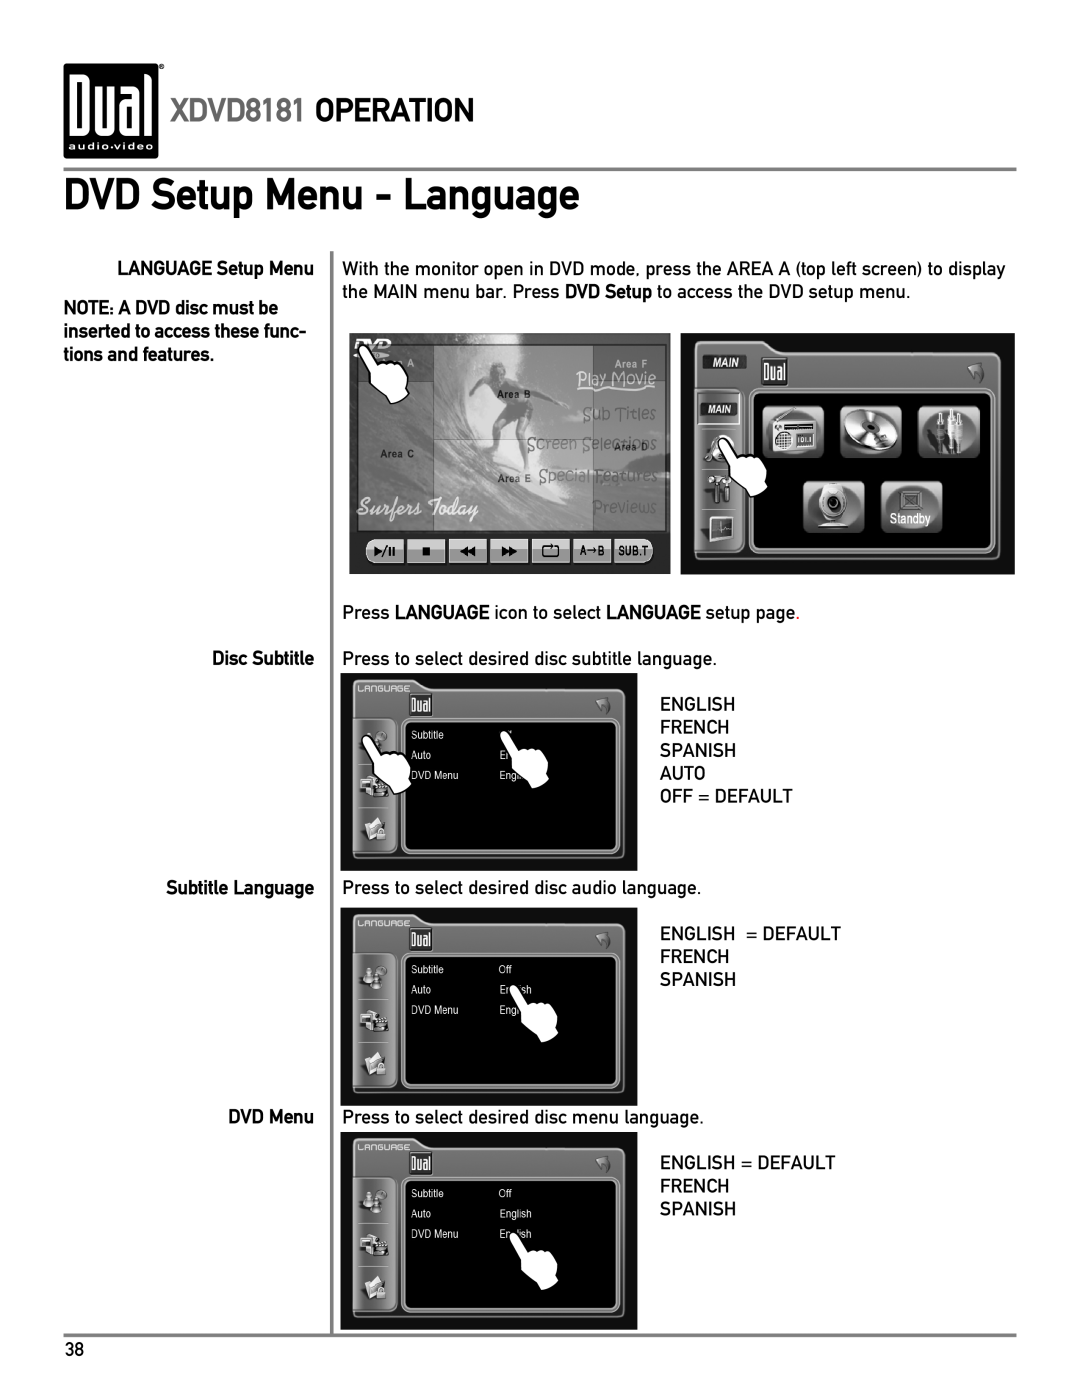 Dual DVD Setup Menu - Language, XDVD8181 OPERATION, LANGUAGE Setup Menu, Disc Subtitle Subtitle Language DVD Menu 